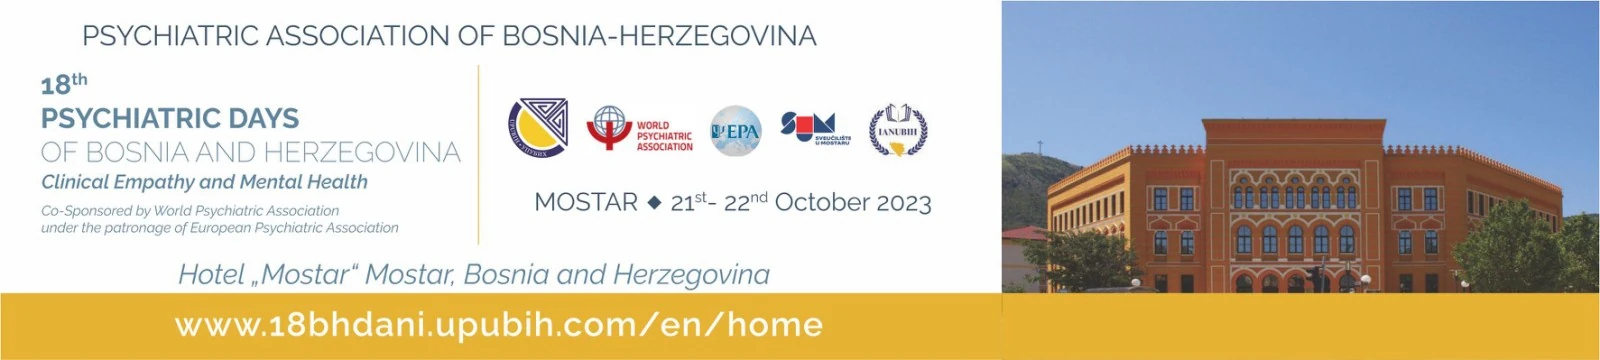 Banner: 18th Psychiatric Days of Bosnia and Herzegovina, Mostar, 21 - 22 October 2023